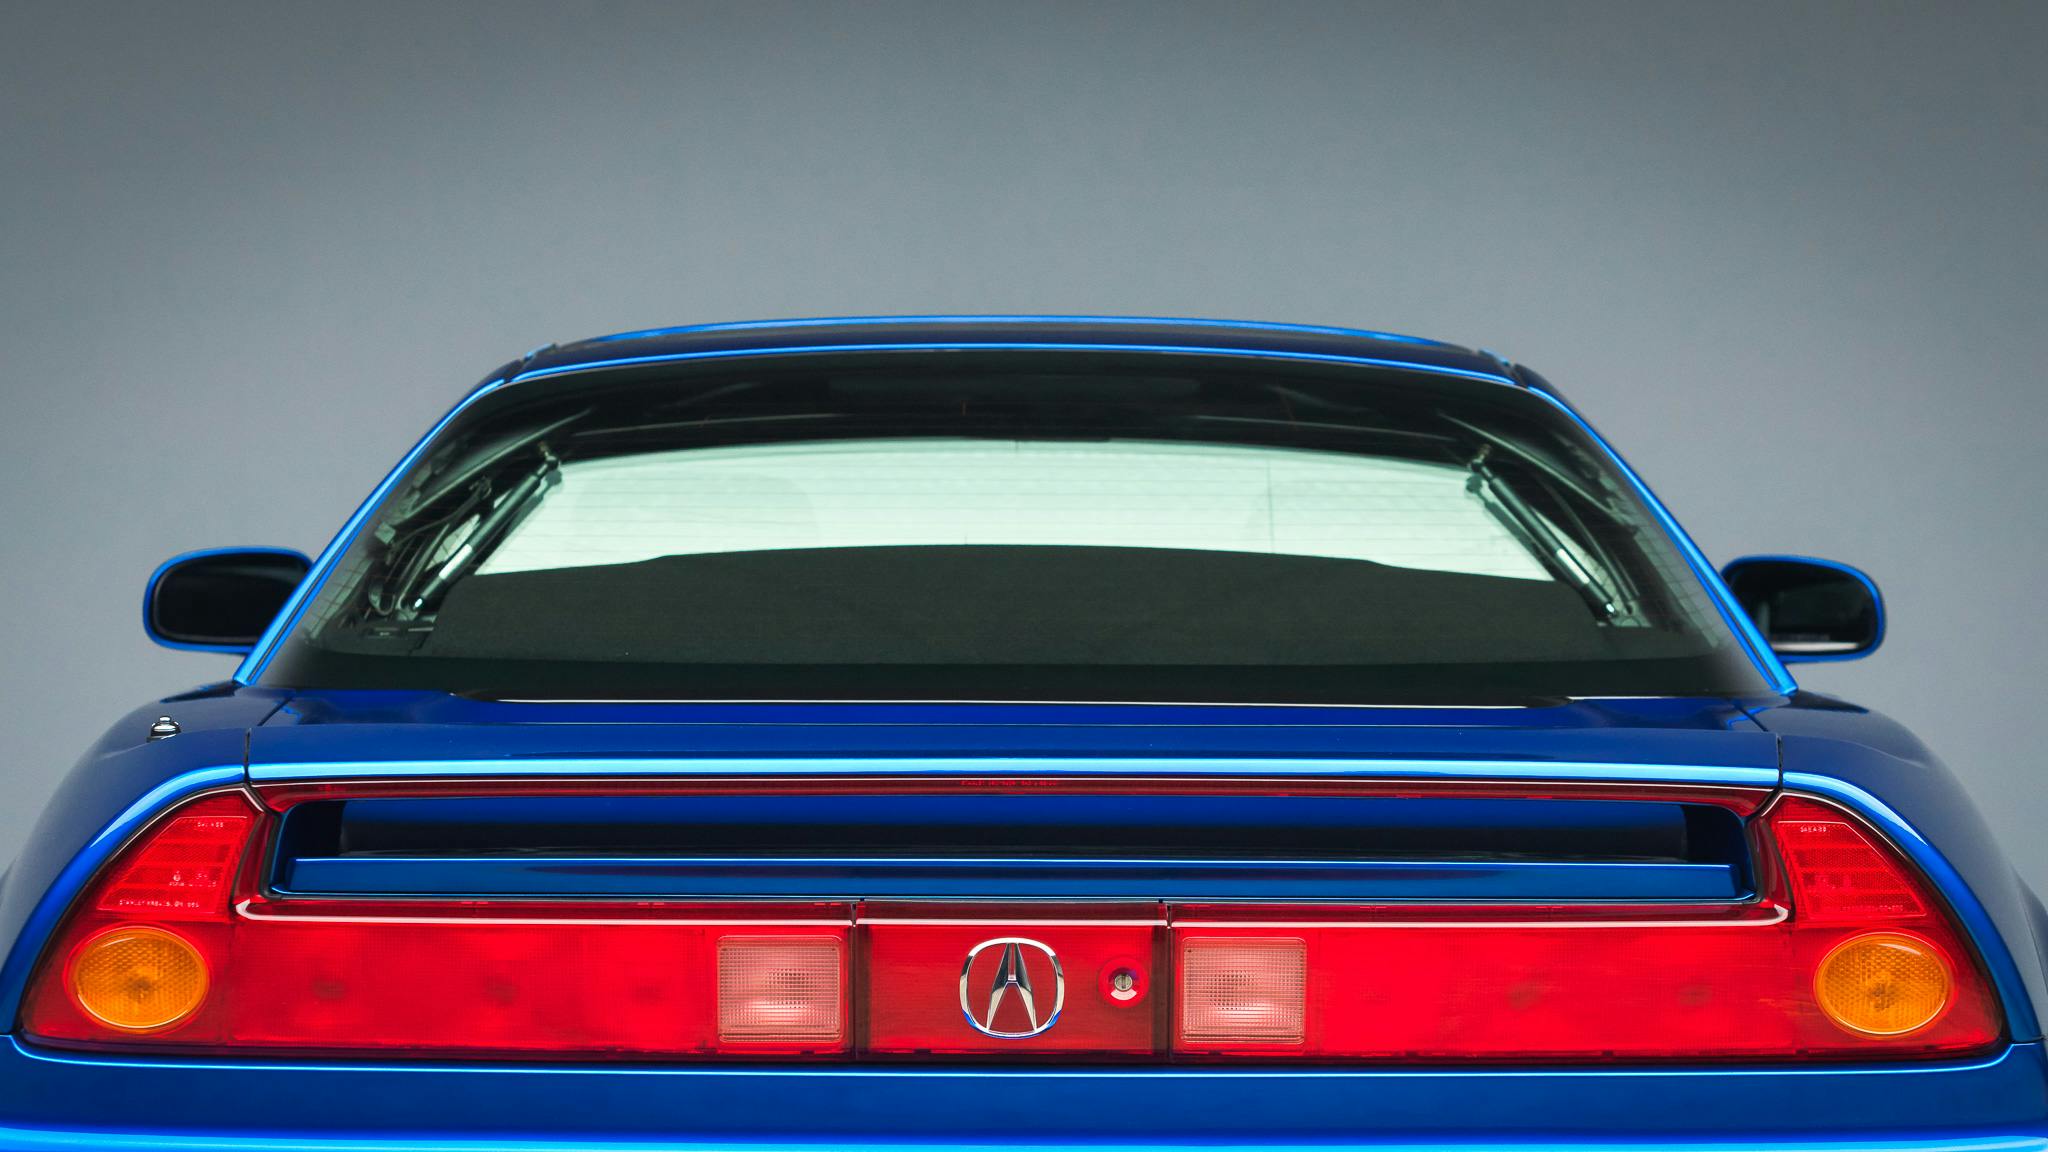 2003 Acura NSX-T rear closeup